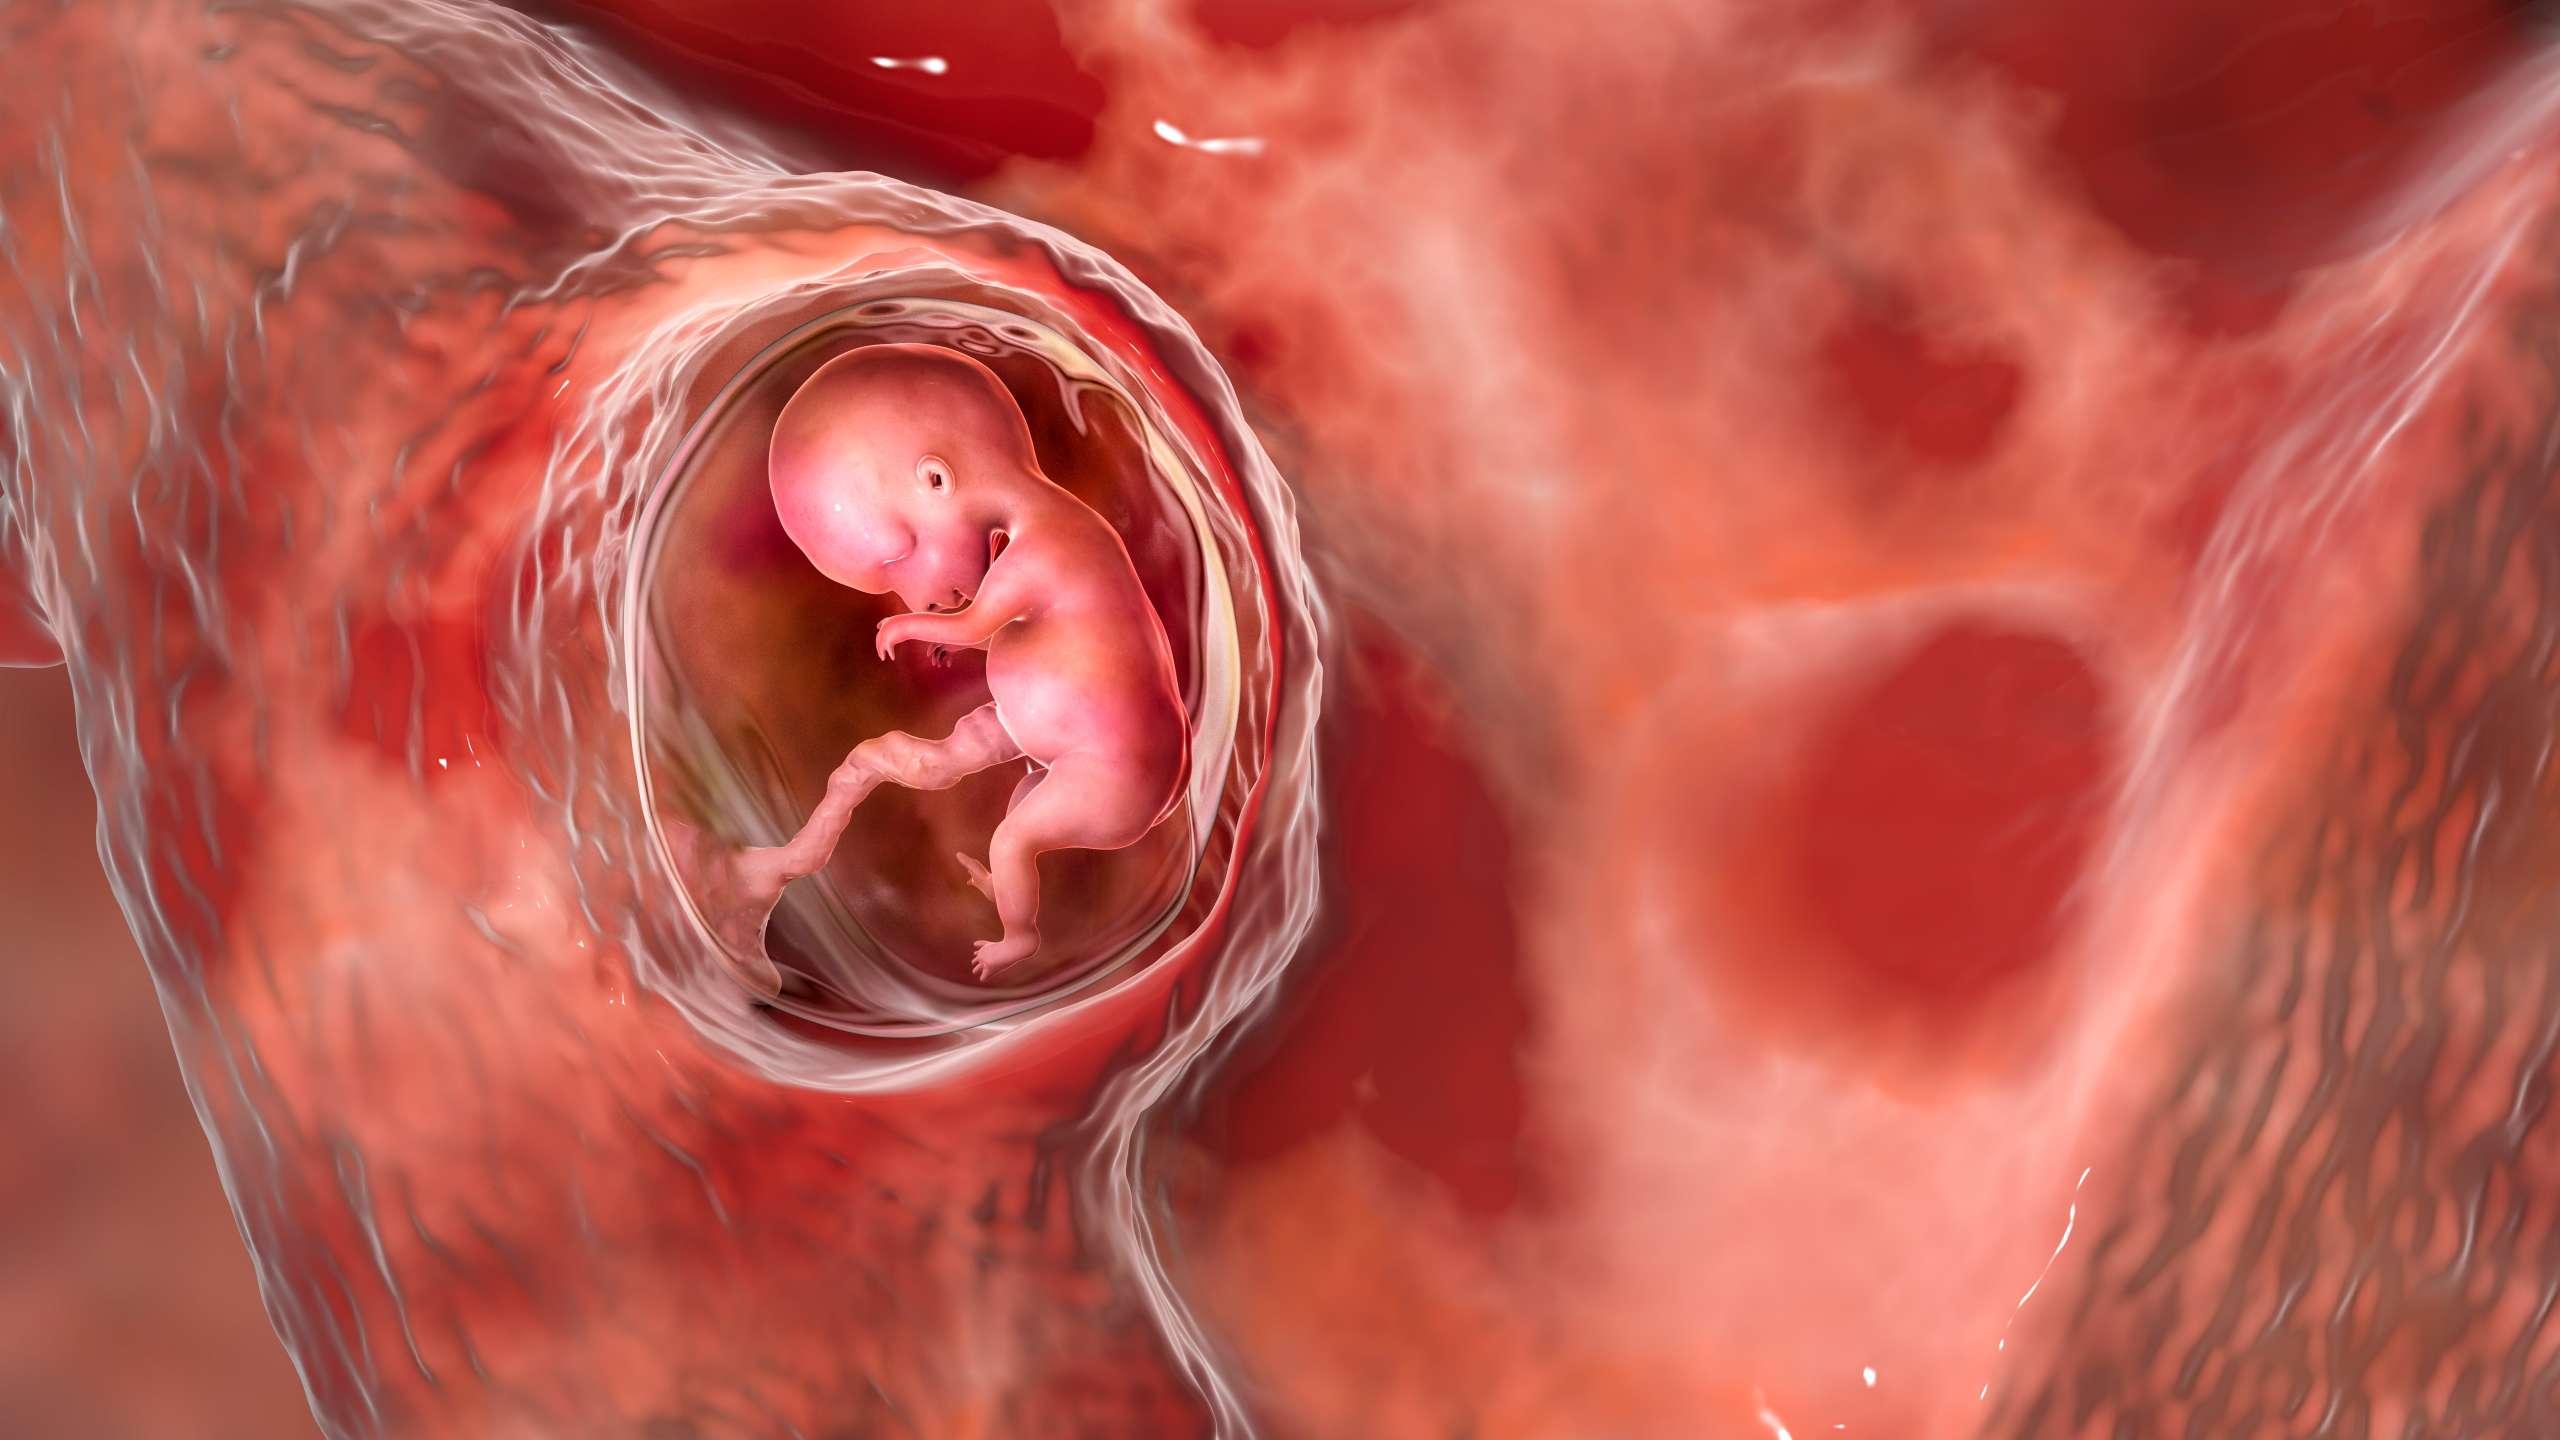 Fetus- Intrauterine Growth Restriction